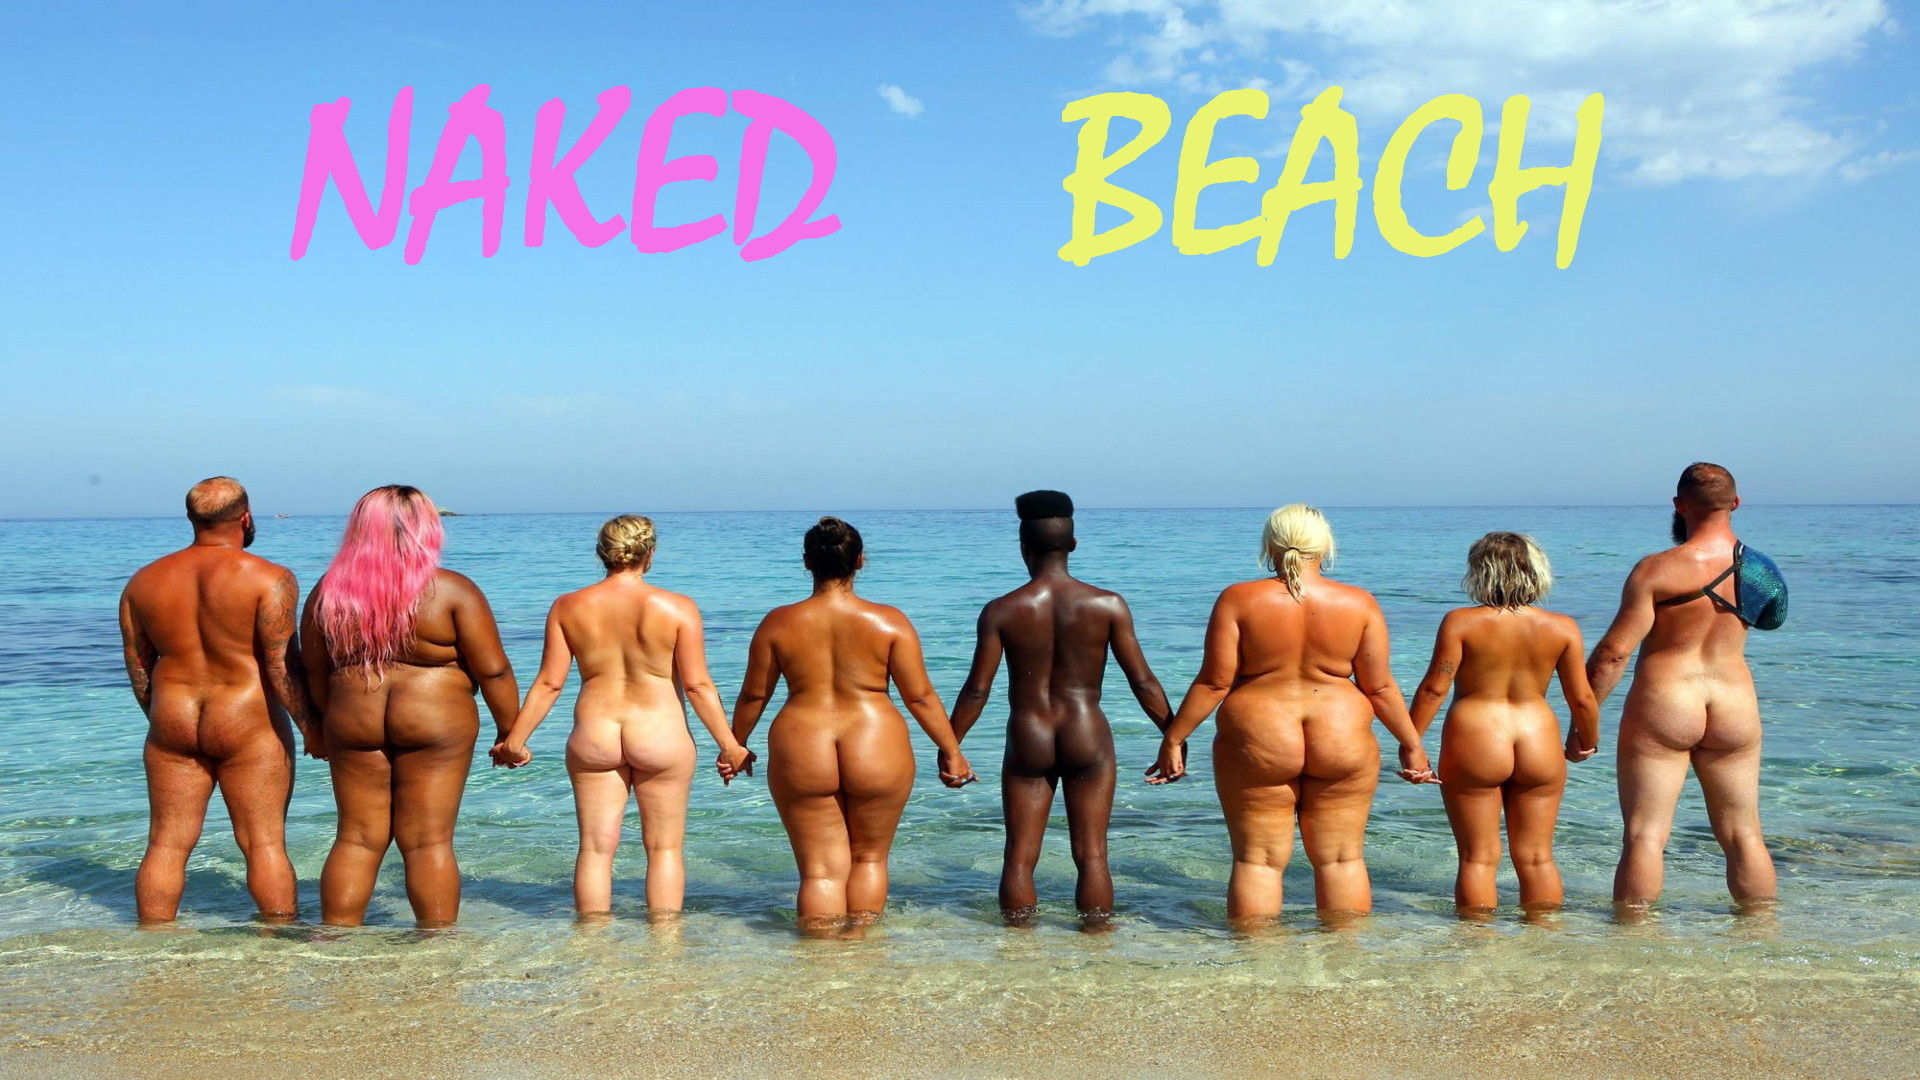 Naked beach frenzy